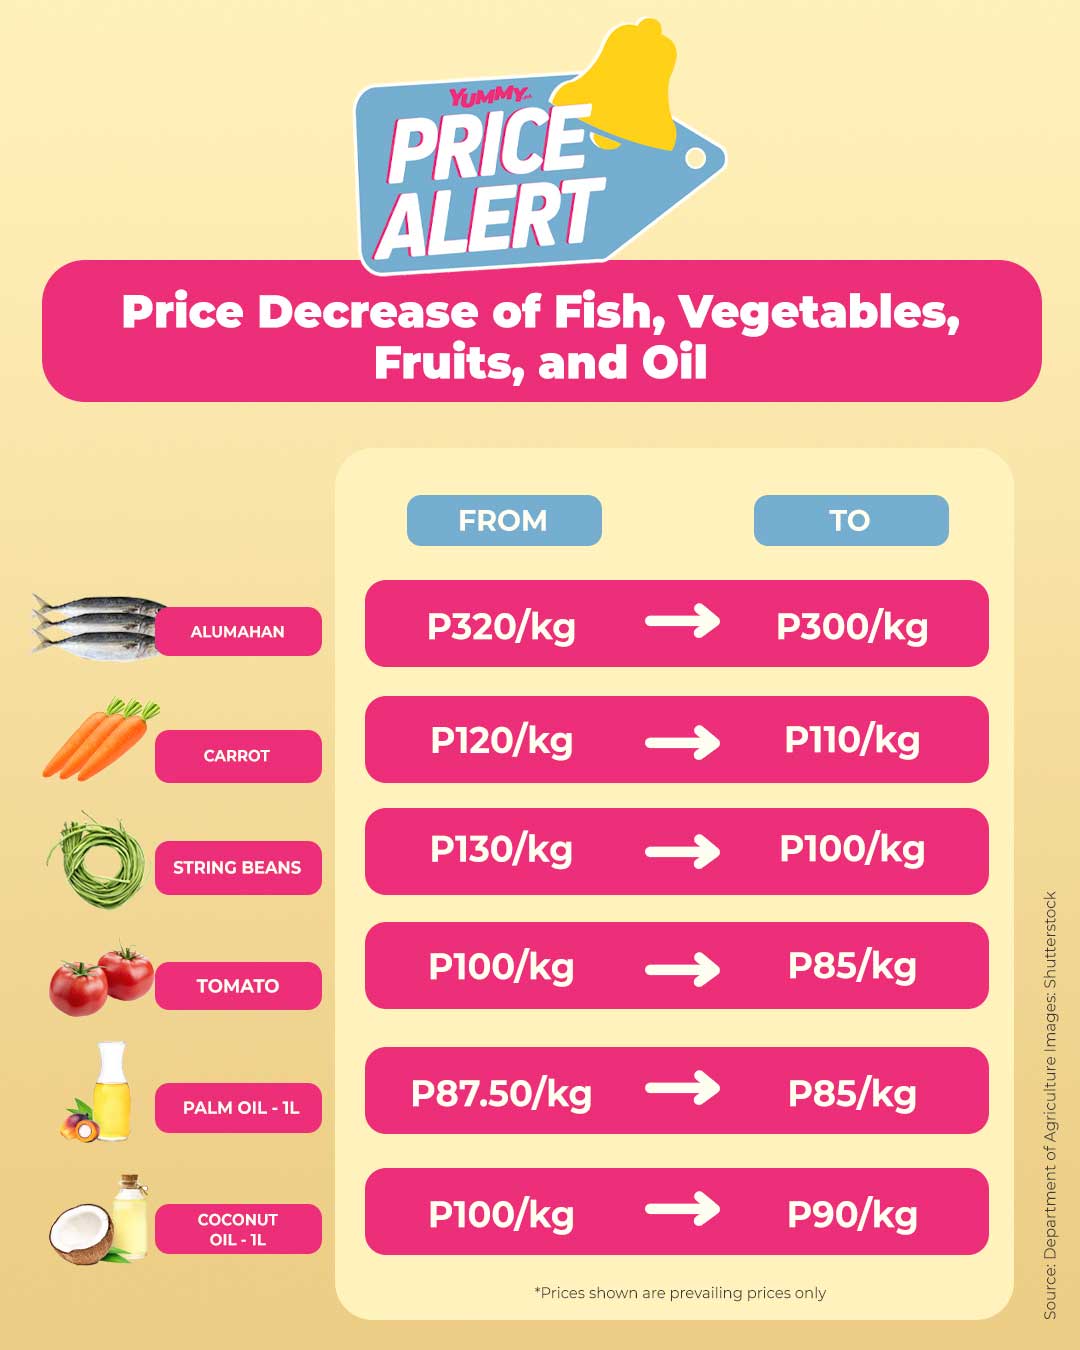 price alert price decrease gulay fish alumahan vegetables price increase palm oil coconut oil